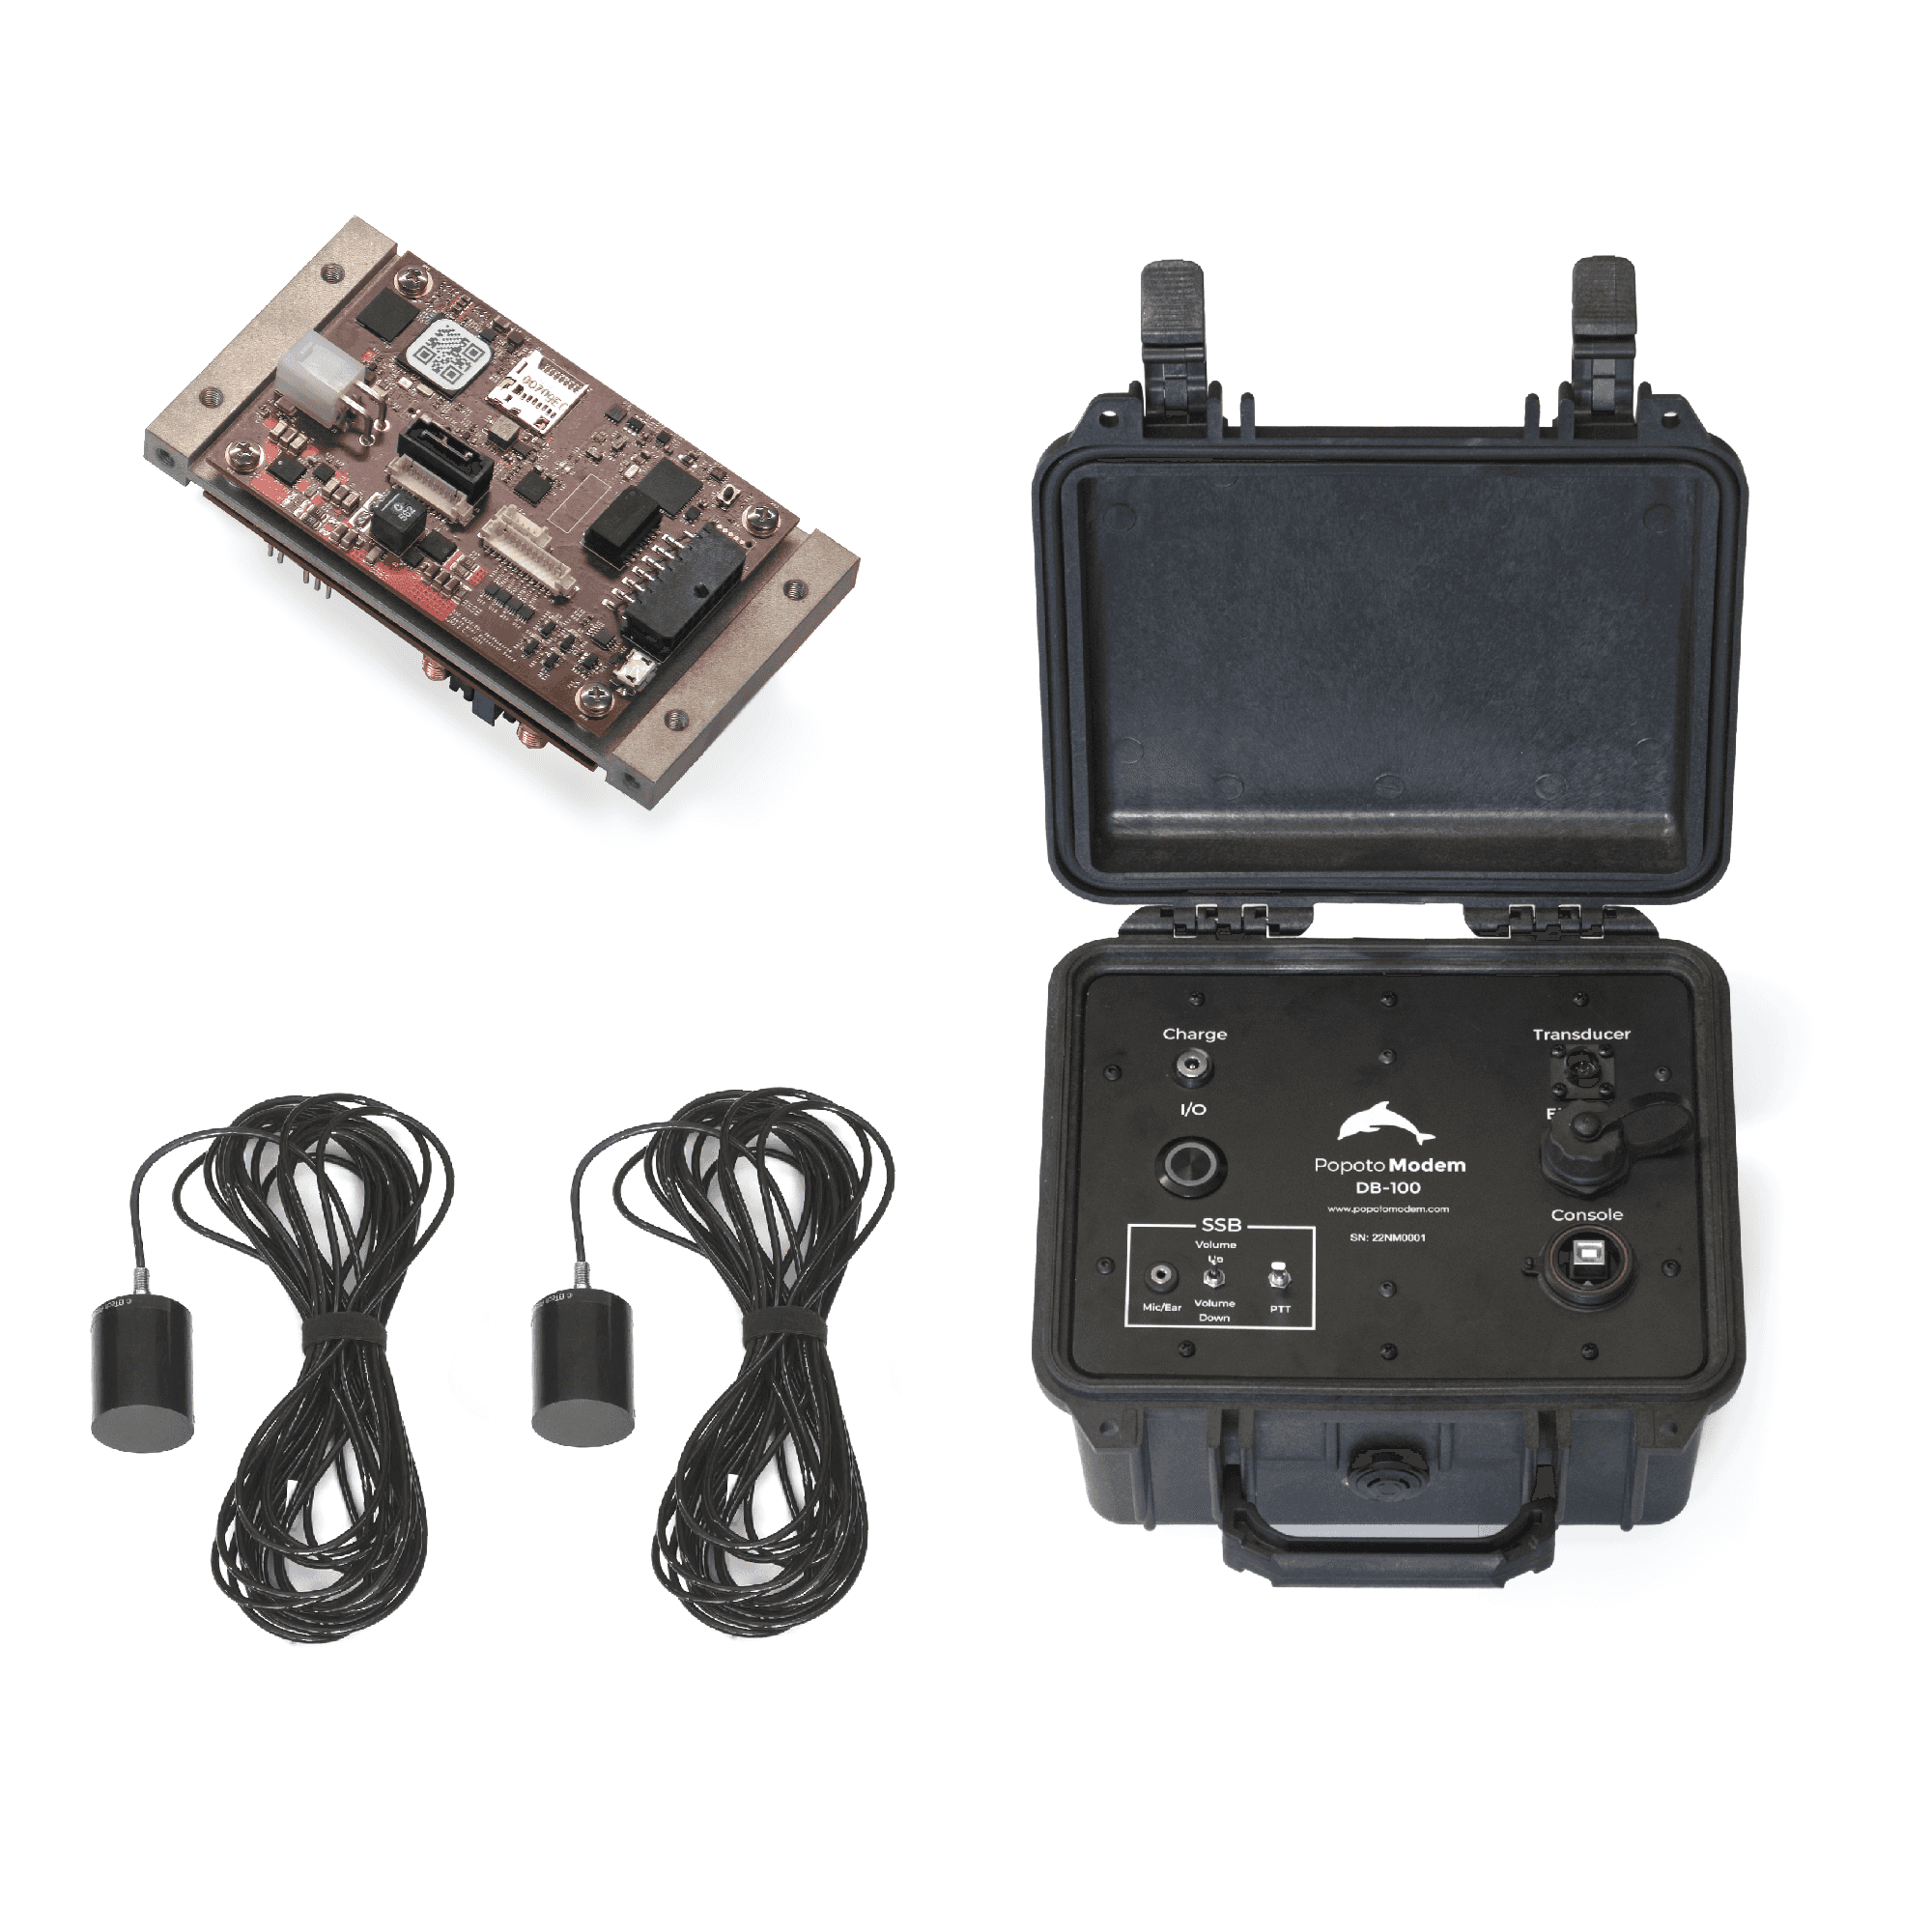 Image of PMM5021 Deckbox and OEM Kit (BK-50-DO)